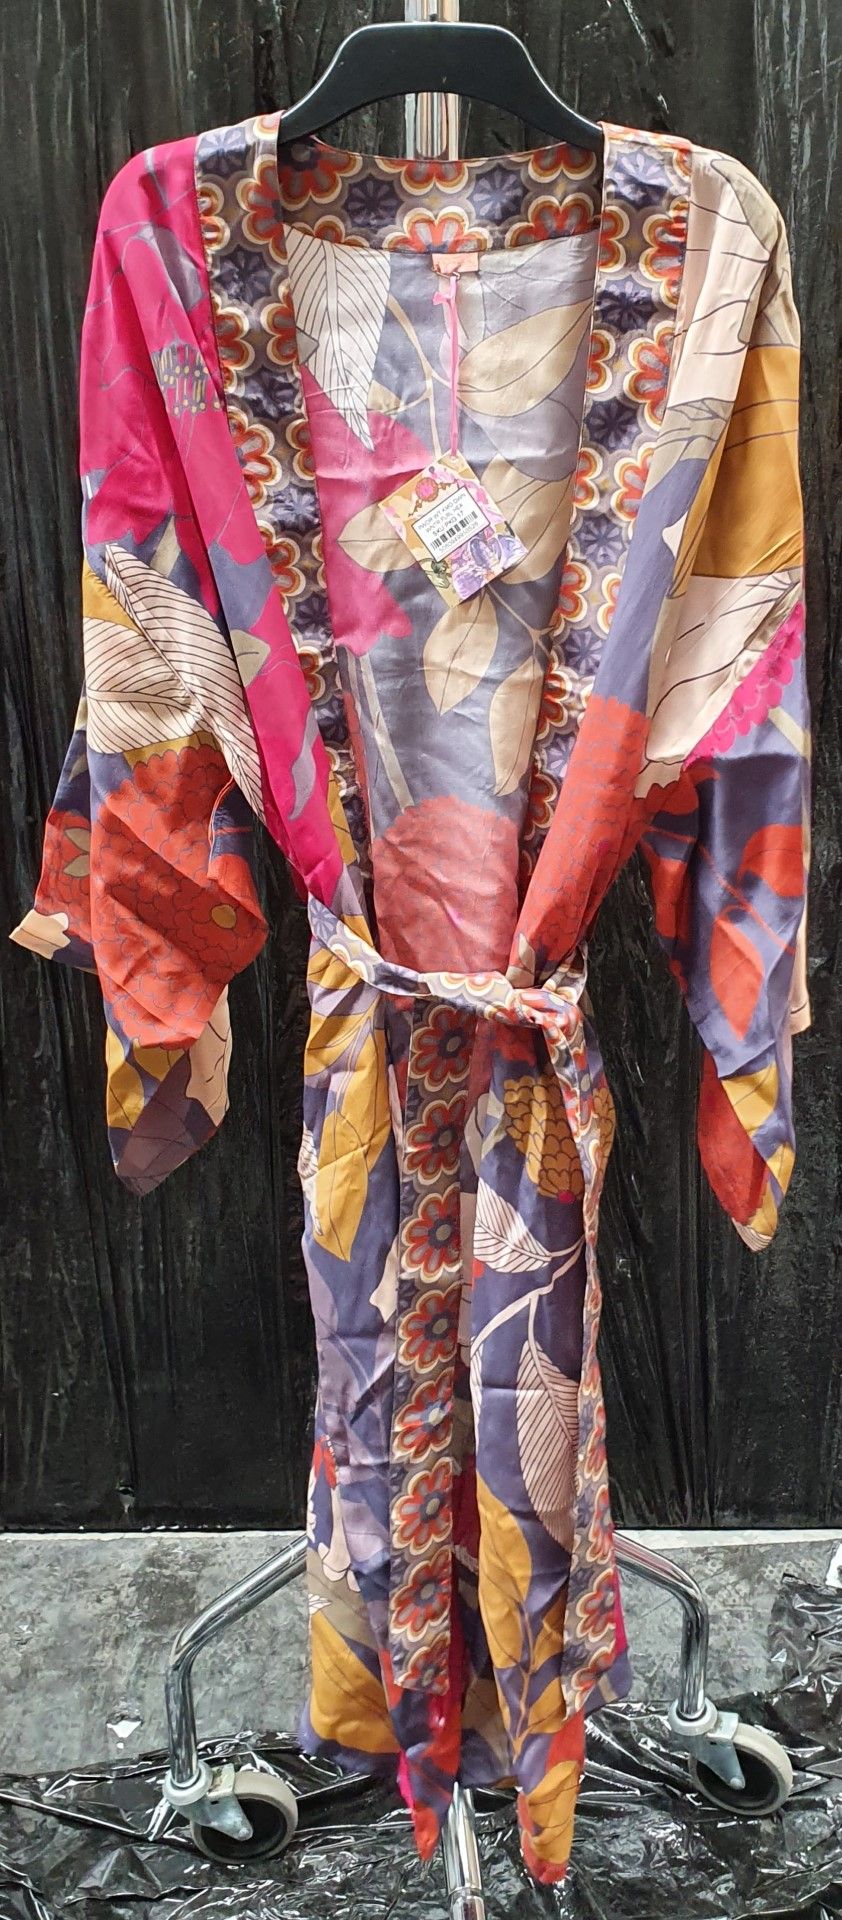 6 x Powder Kimono Style Gowns and 1 x Scarf - Folk Art Petal Finish 100% Viscose Fabric - Adult - Image 13 of 22